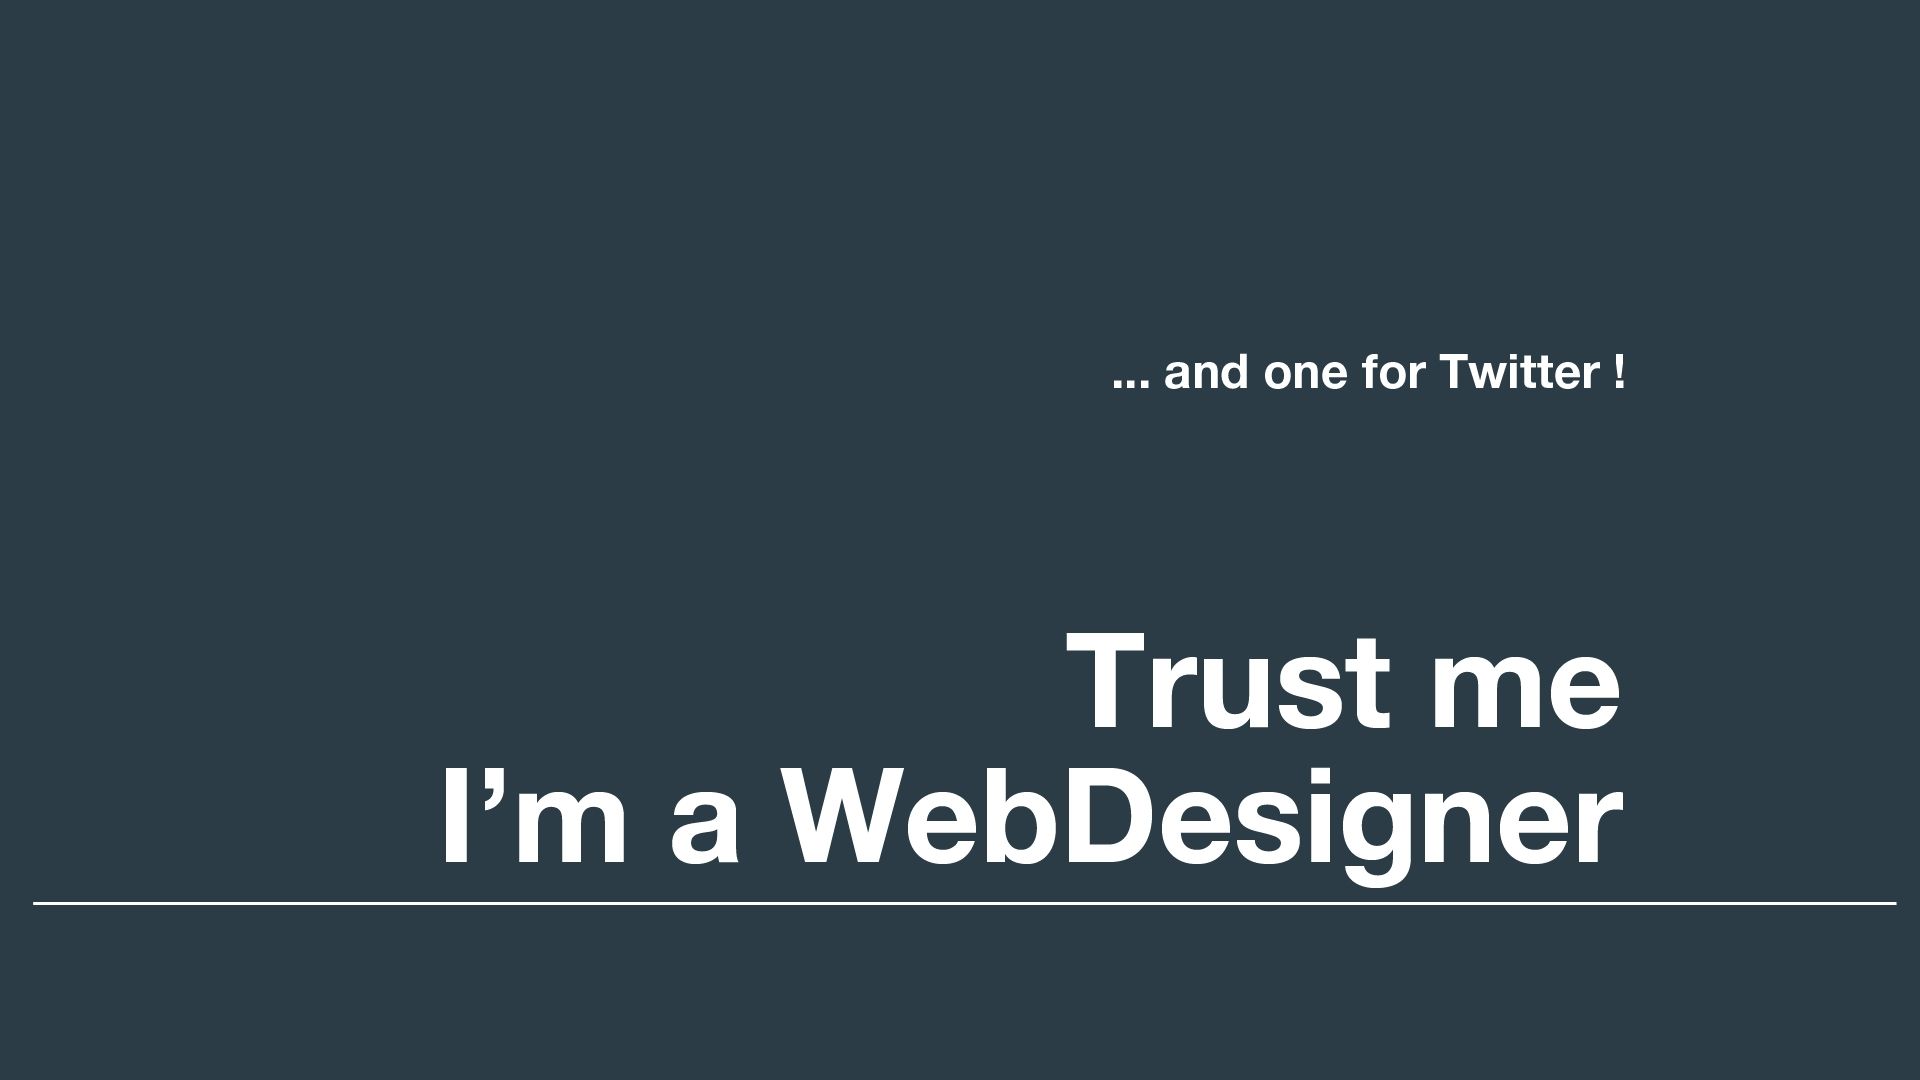 Free download 40 Web Design Wallpaper for Design Geeks Modny73